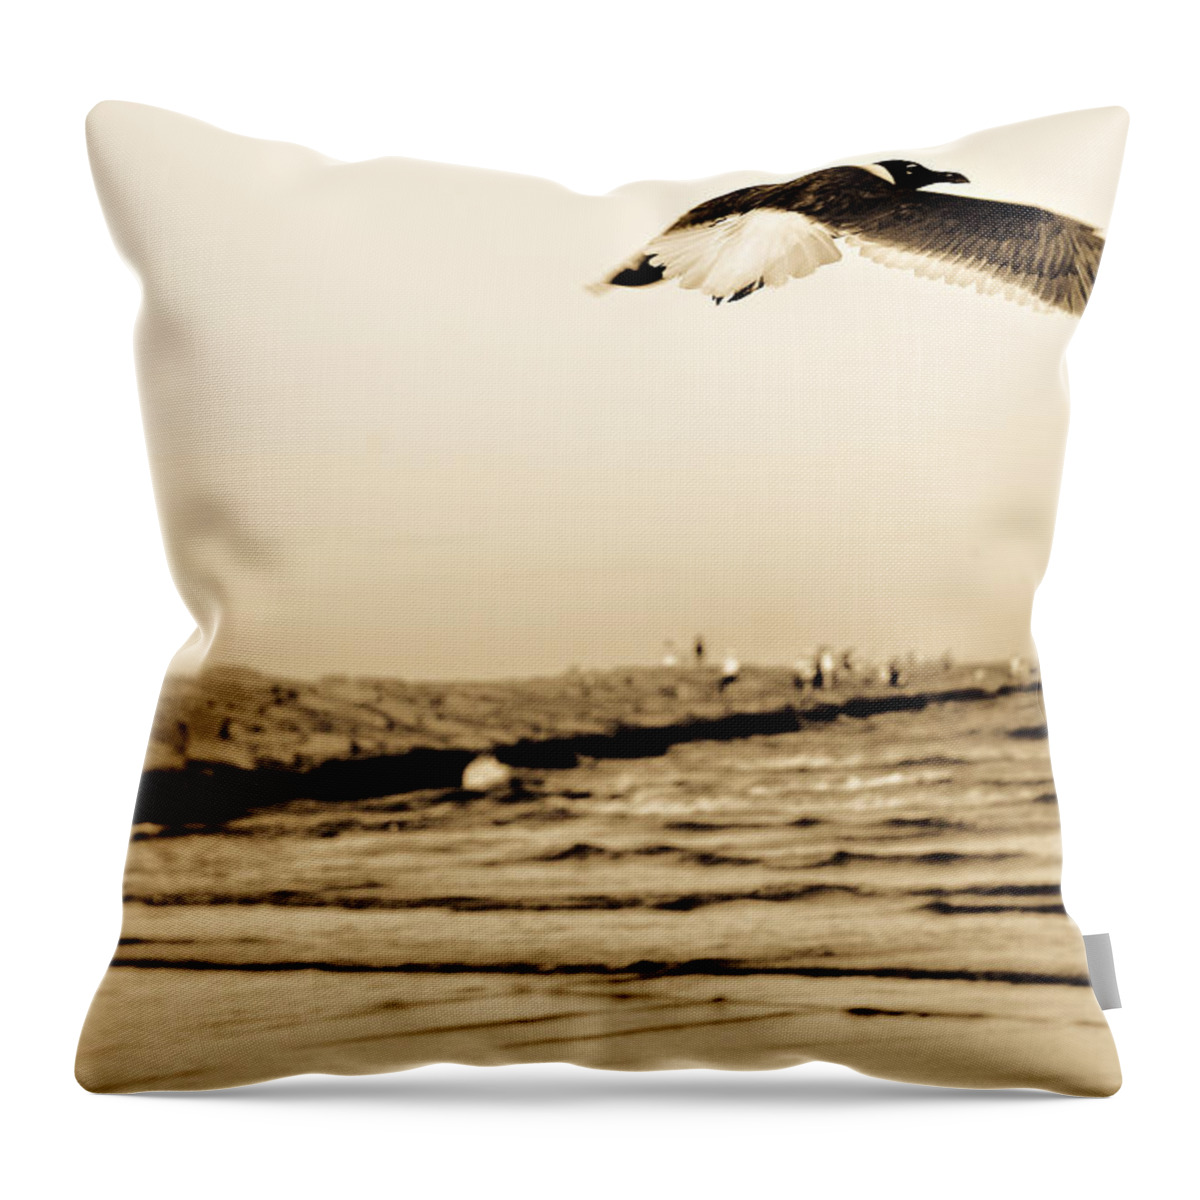 Bird Throw Pillow featuring the photograph Coastal Bird in Flight by Marilyn Hunt